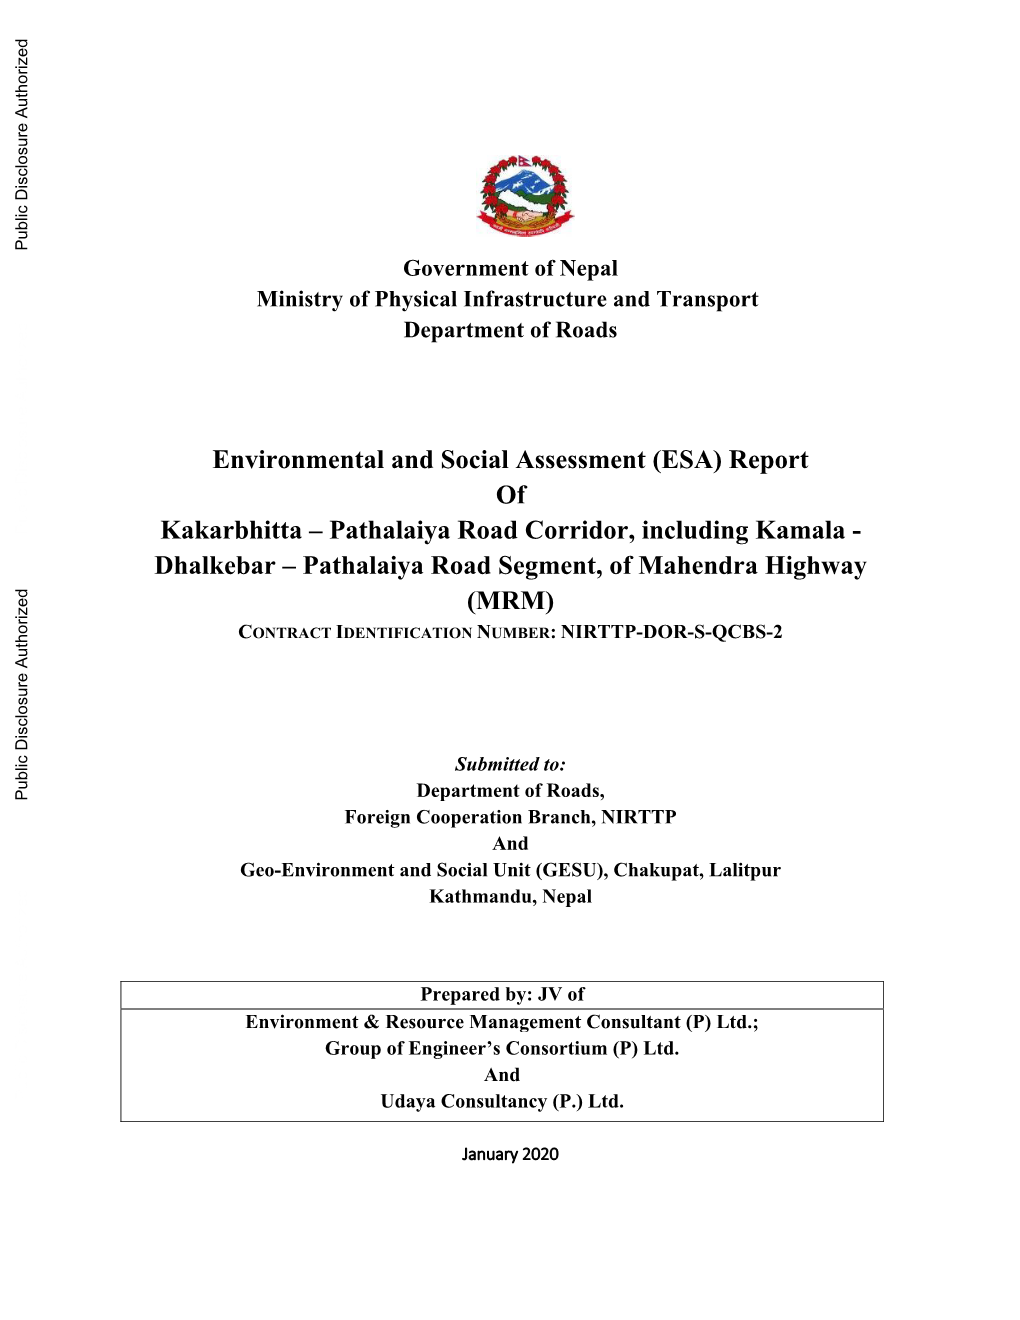 Environmental and Social Assessment (ESA) Report Of